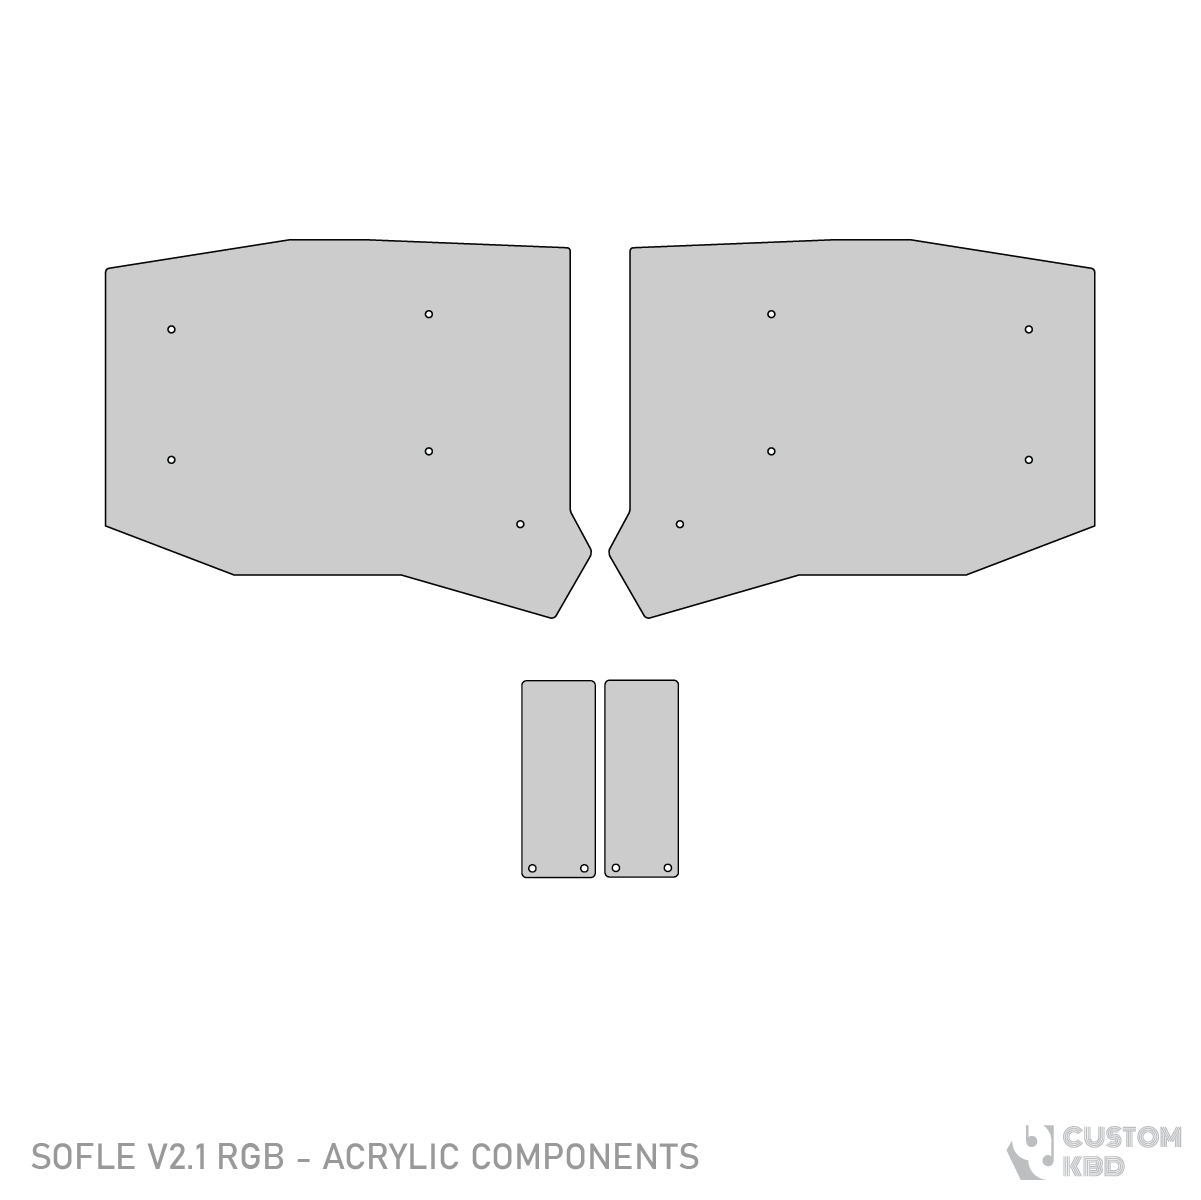 Sofle V2.1 - Acrylic Components